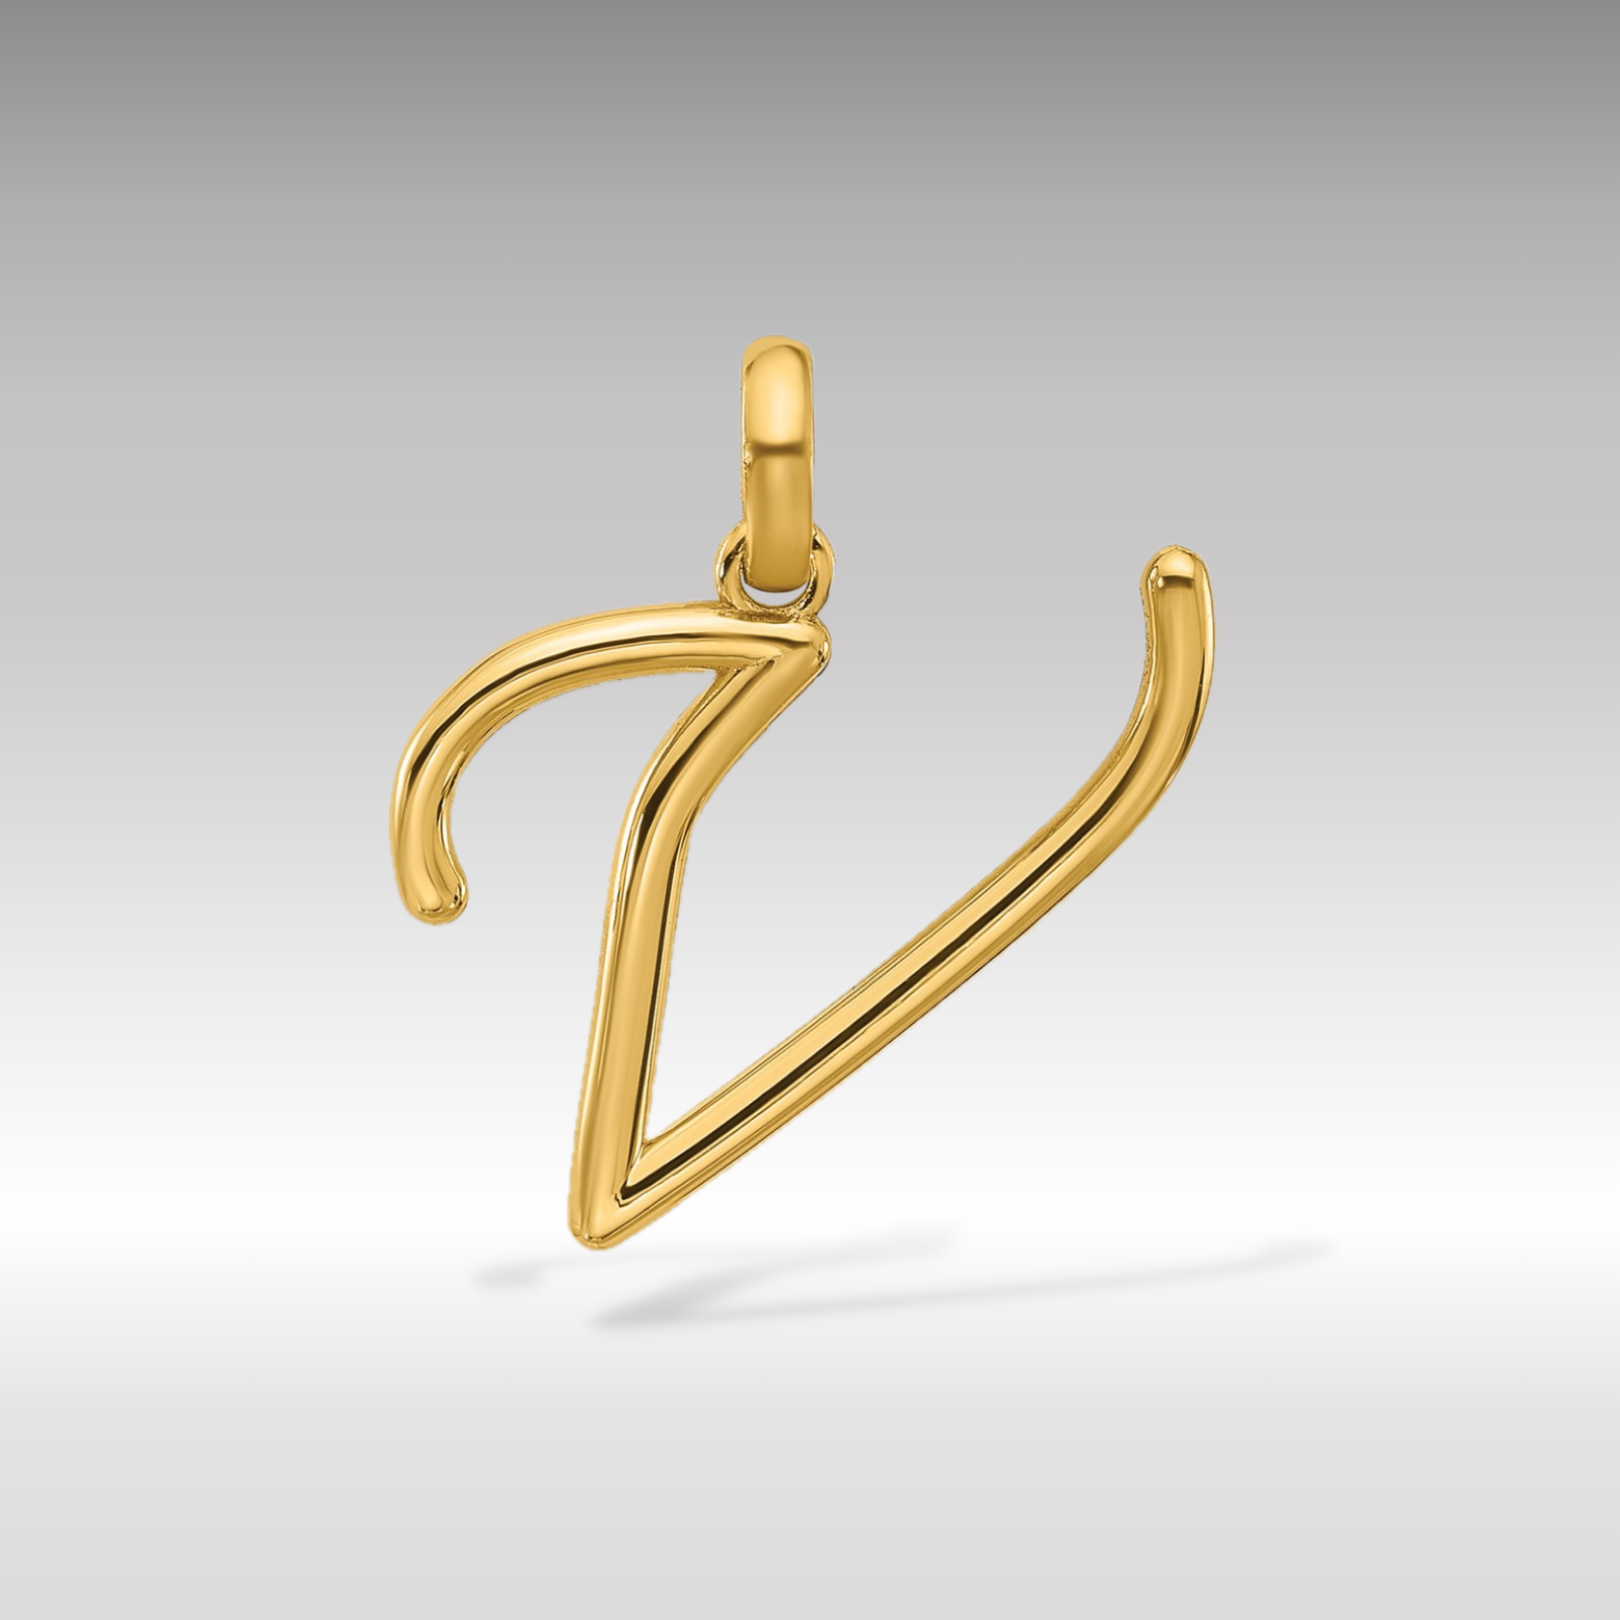 14K Gold Fancy Letter 'V' Charm Pendant - Charlie & Co. Jewelry